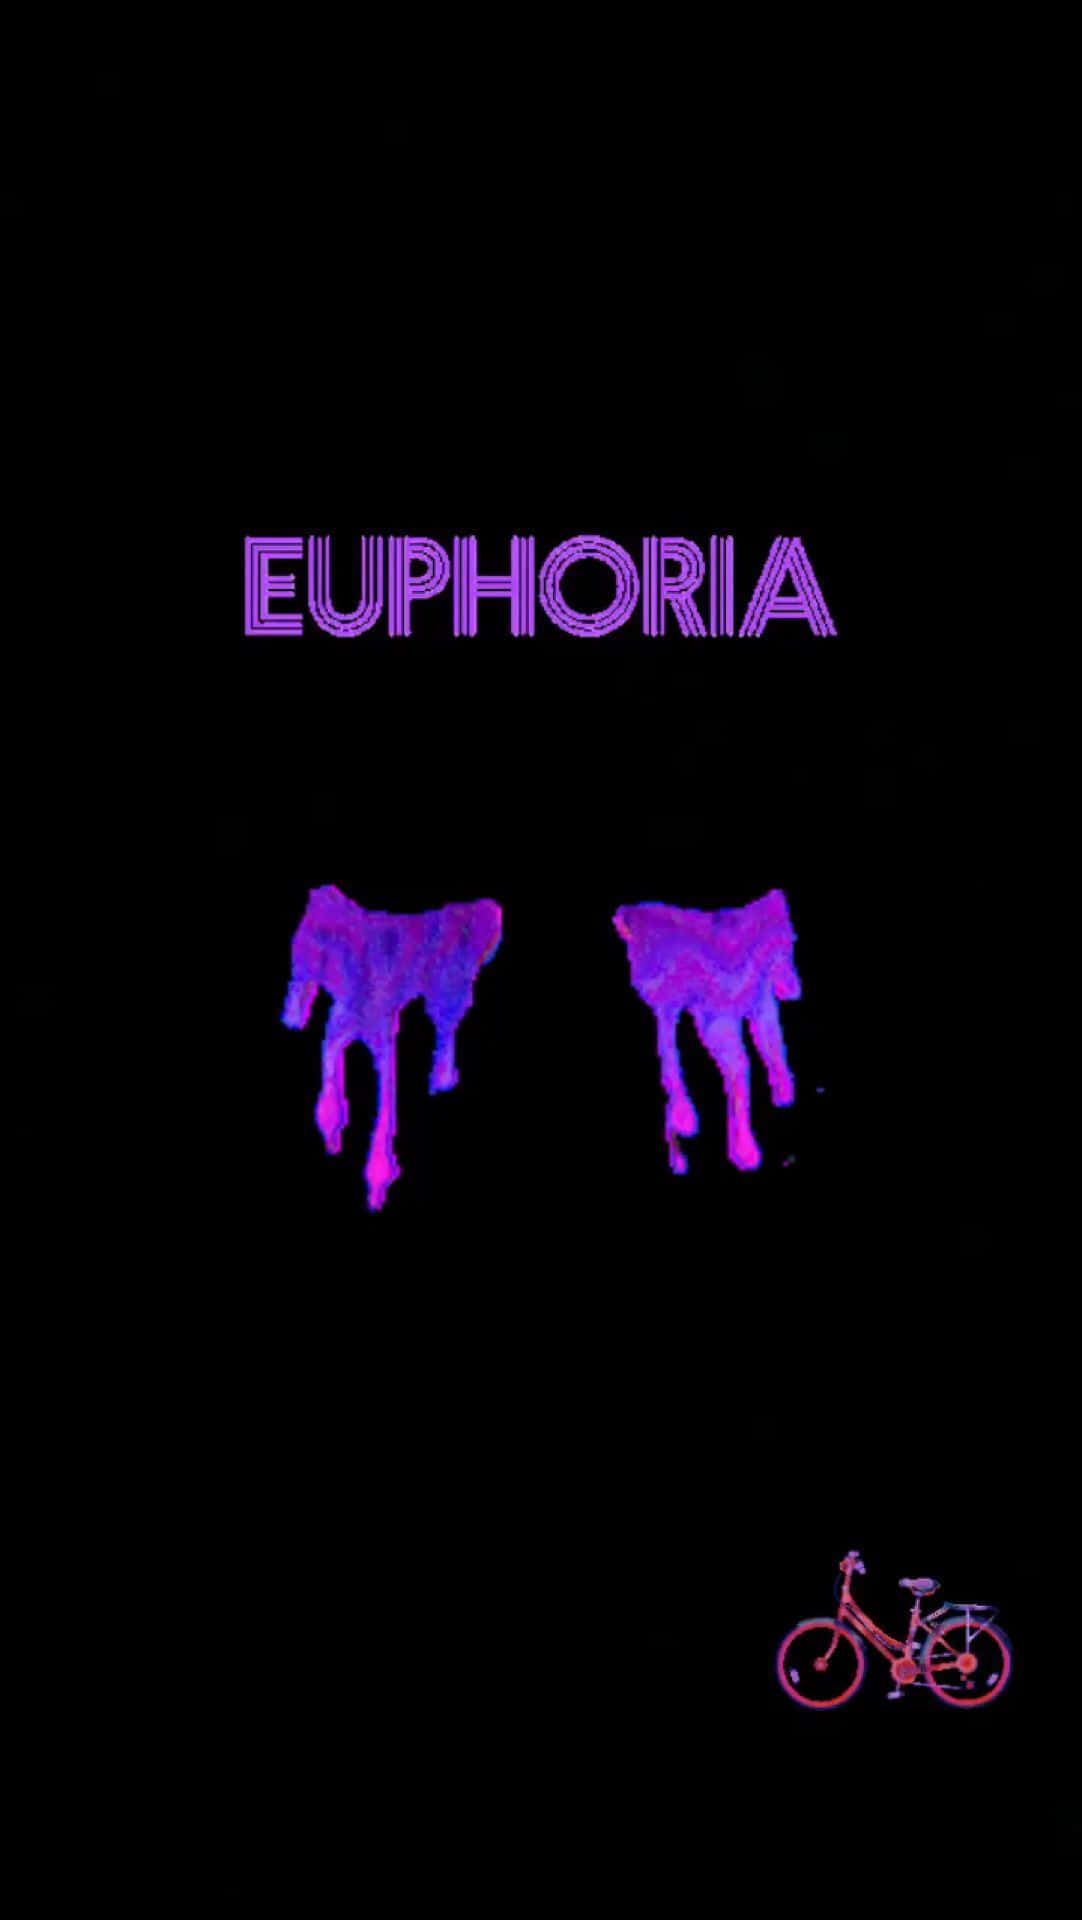 Euforiaeuforia - Euforia - Euforia -